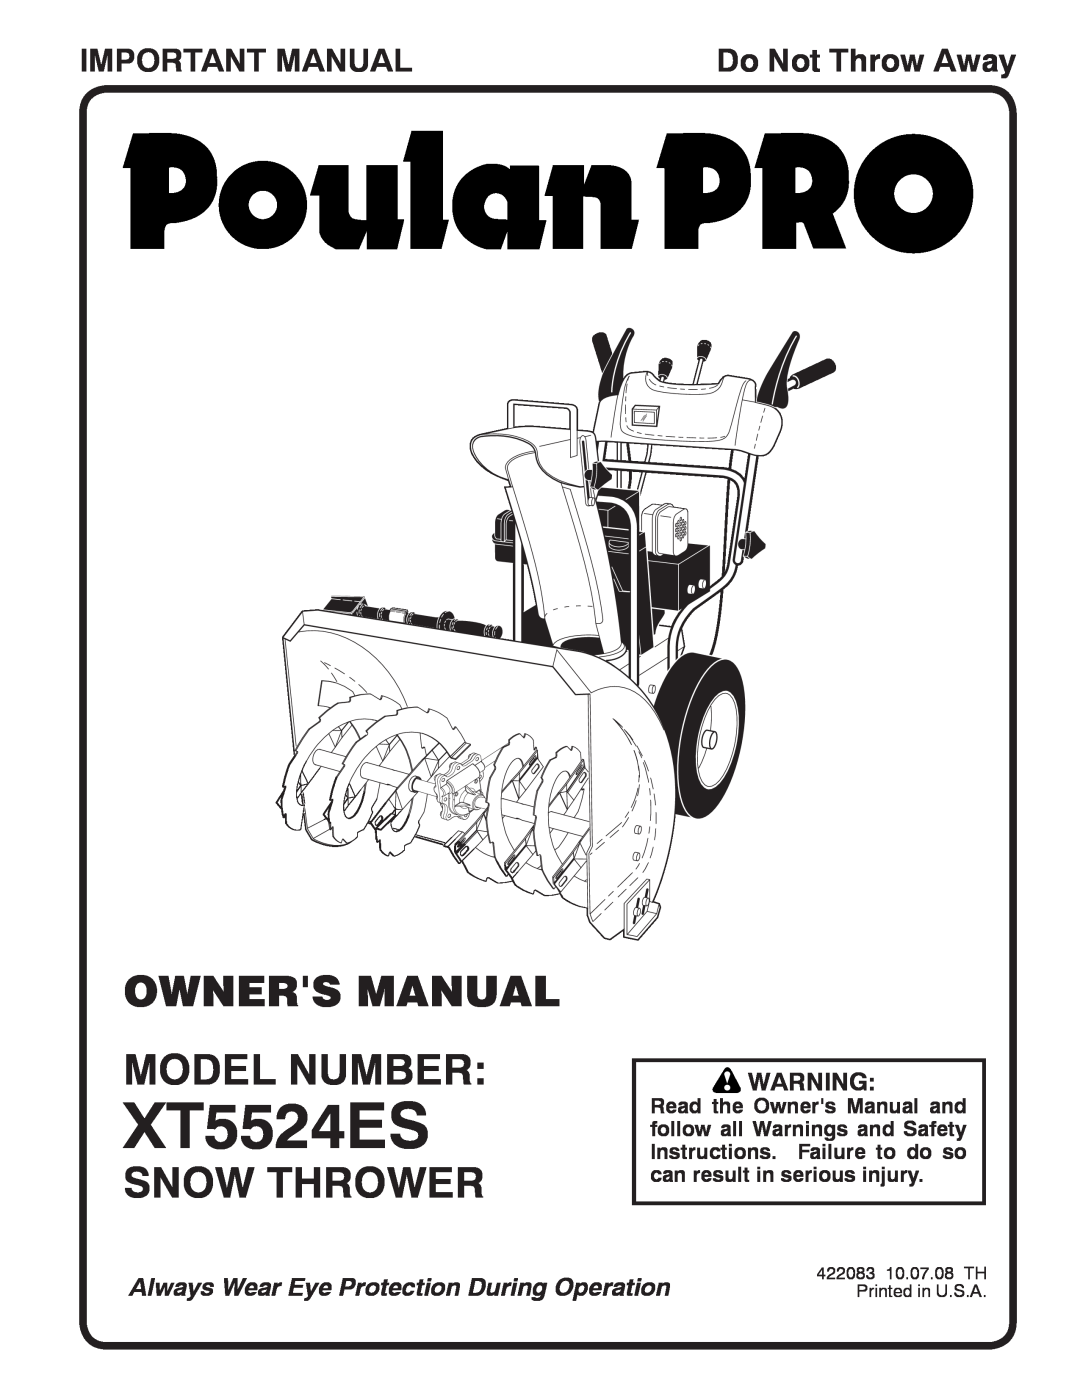 Poulan 422083, 96192002202 owner manual Snow Thrower, Important Manual, XT5524ES, Do Not Throw Away 